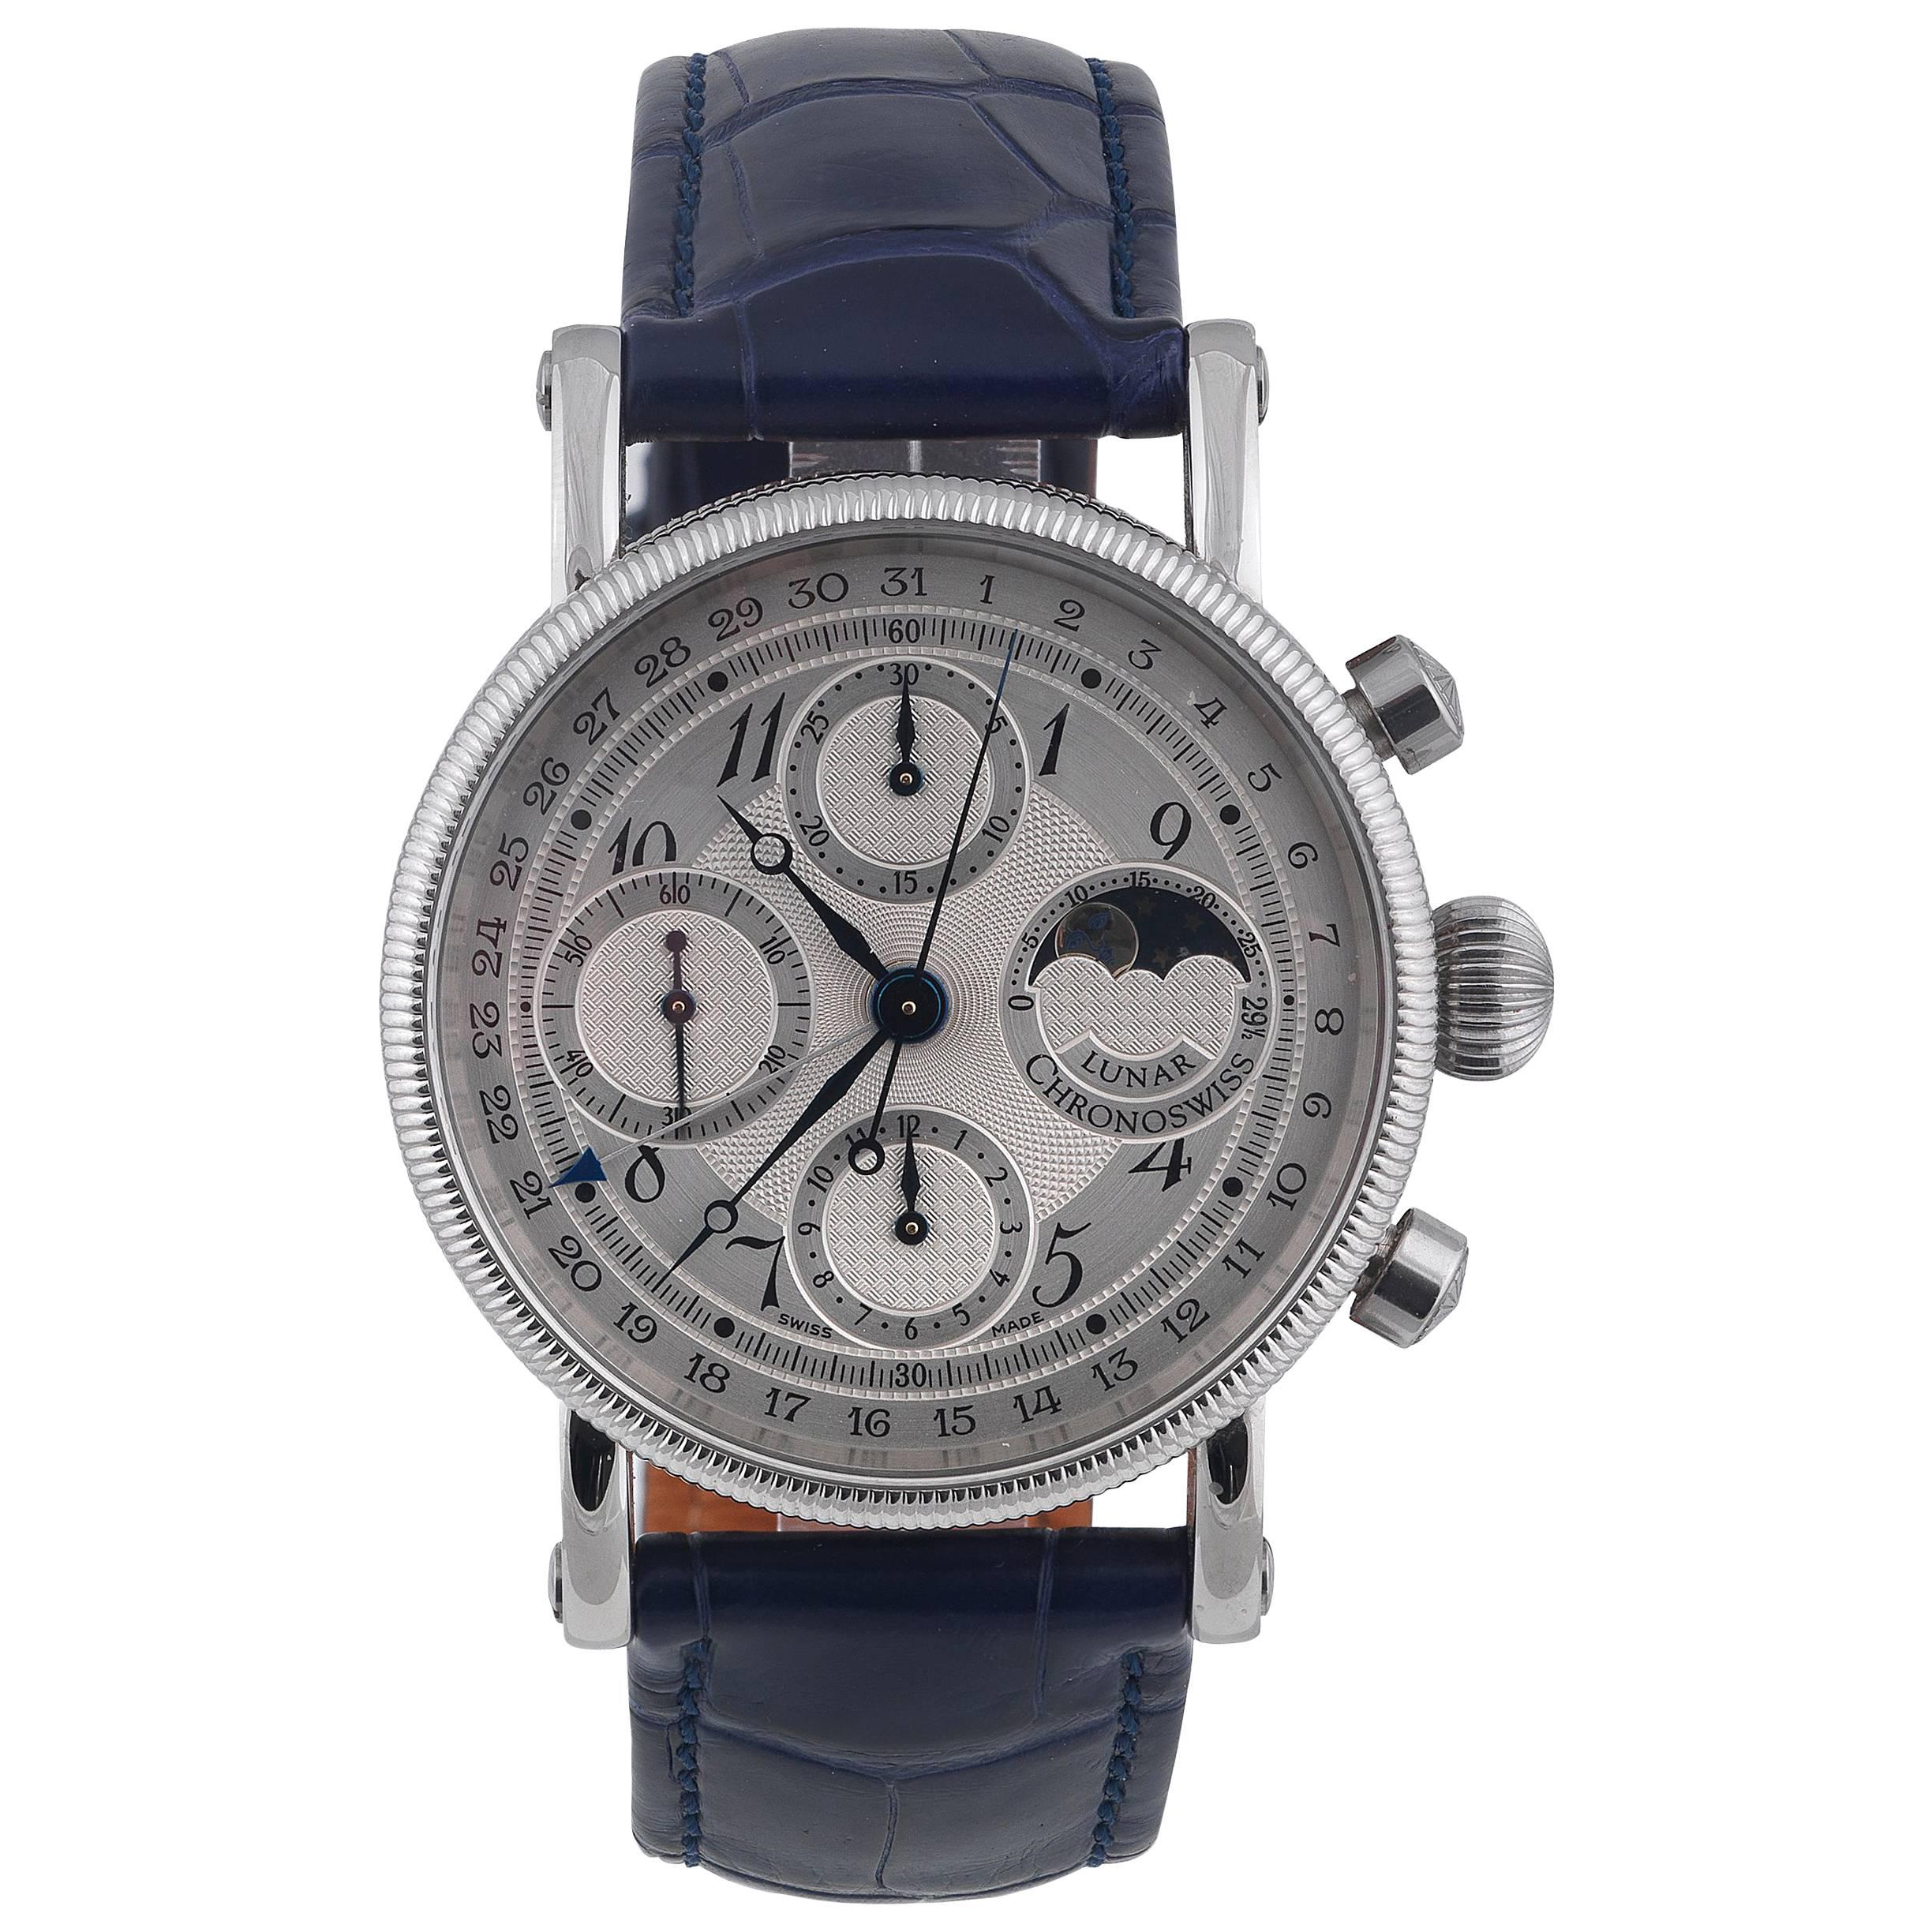 Chronoswiss stainless steel Lunar Chronograph automatic wristwatch